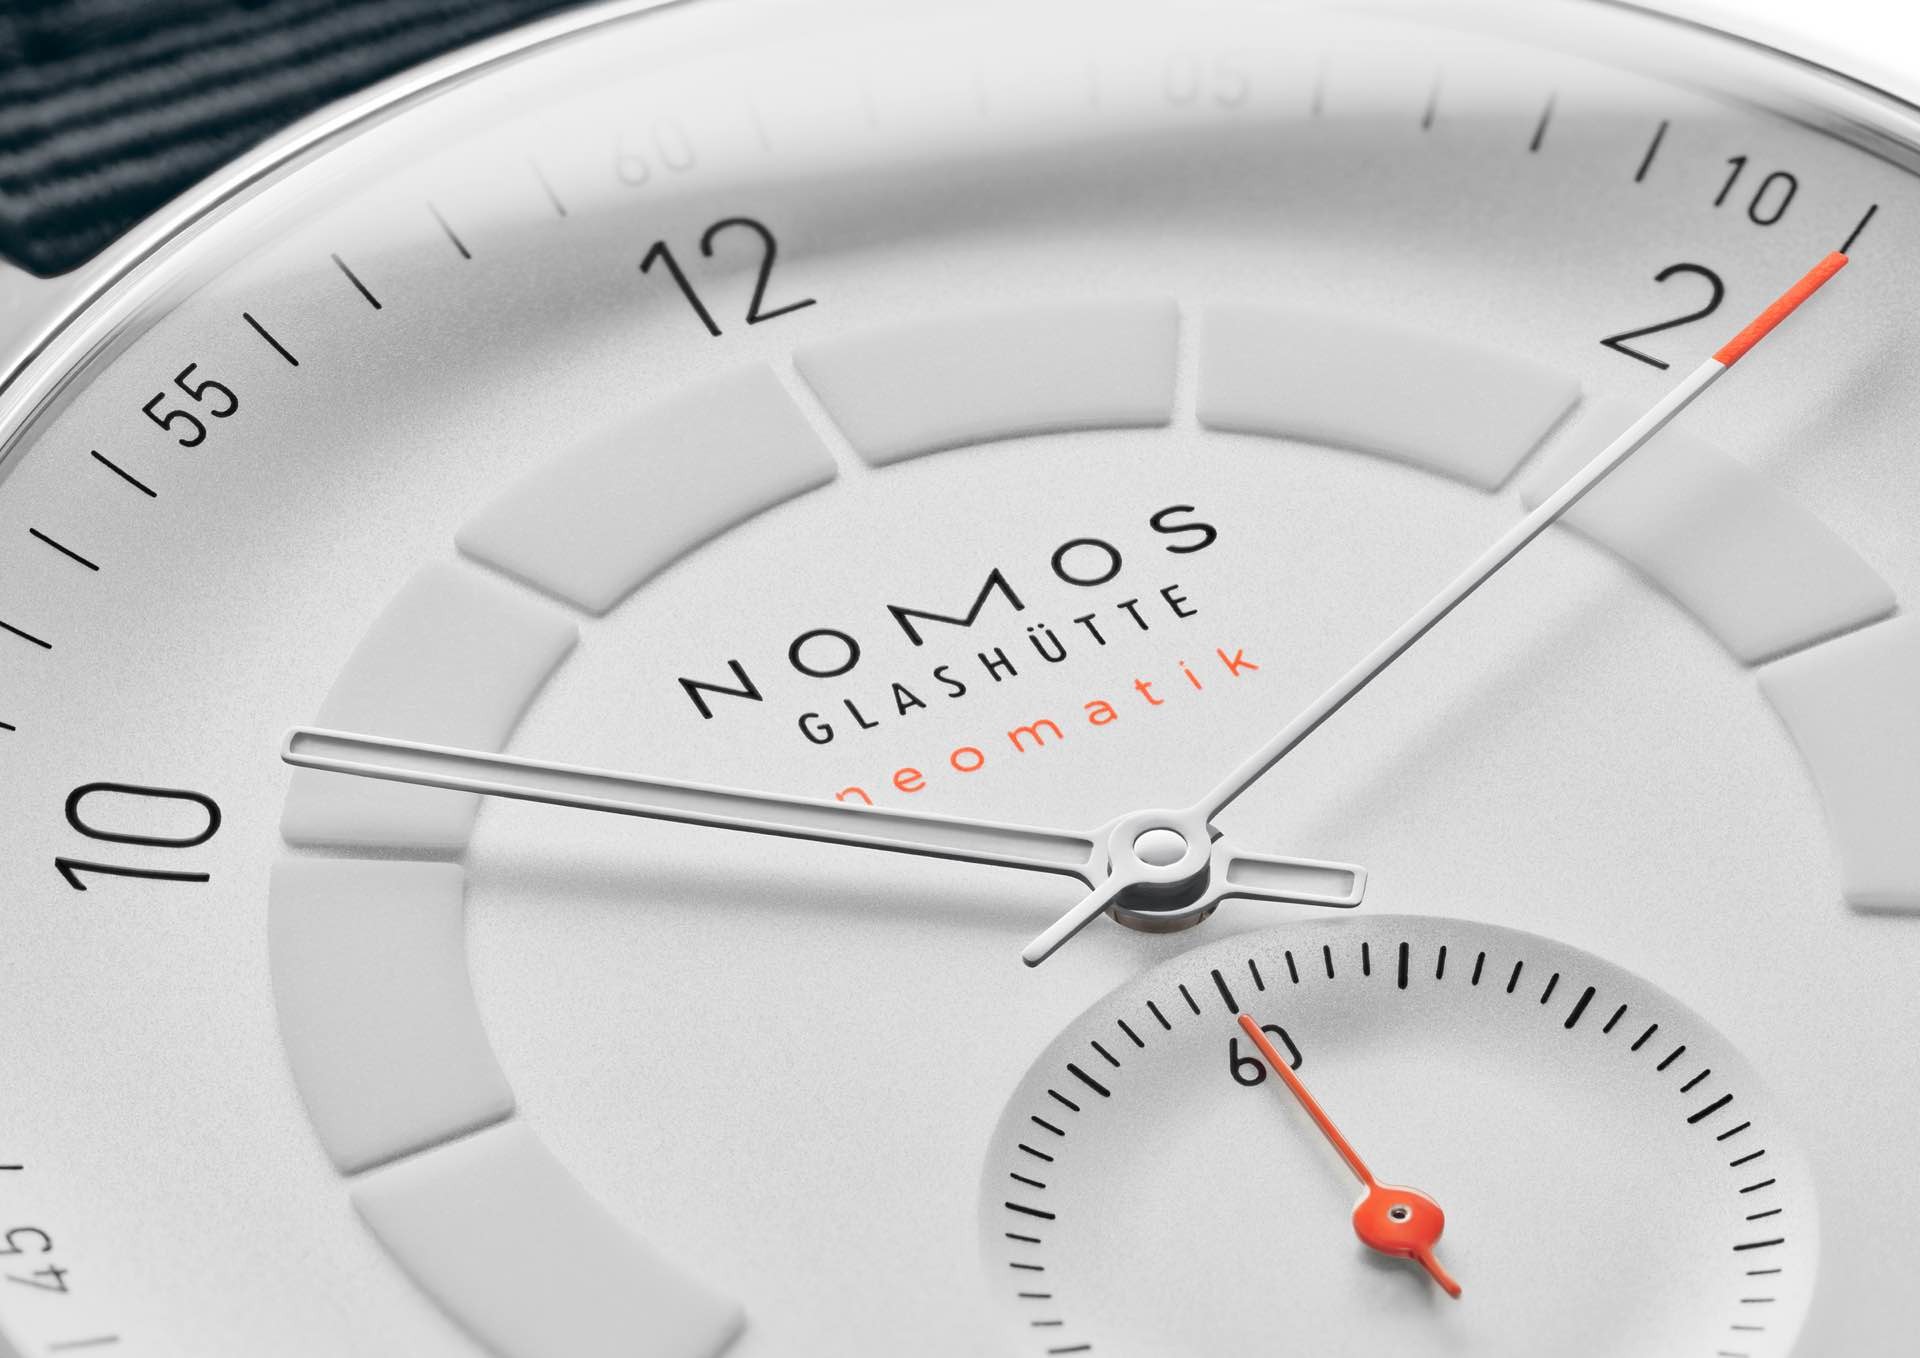 nomos-glashütte-autobahn-neomatik-watch-dial-2